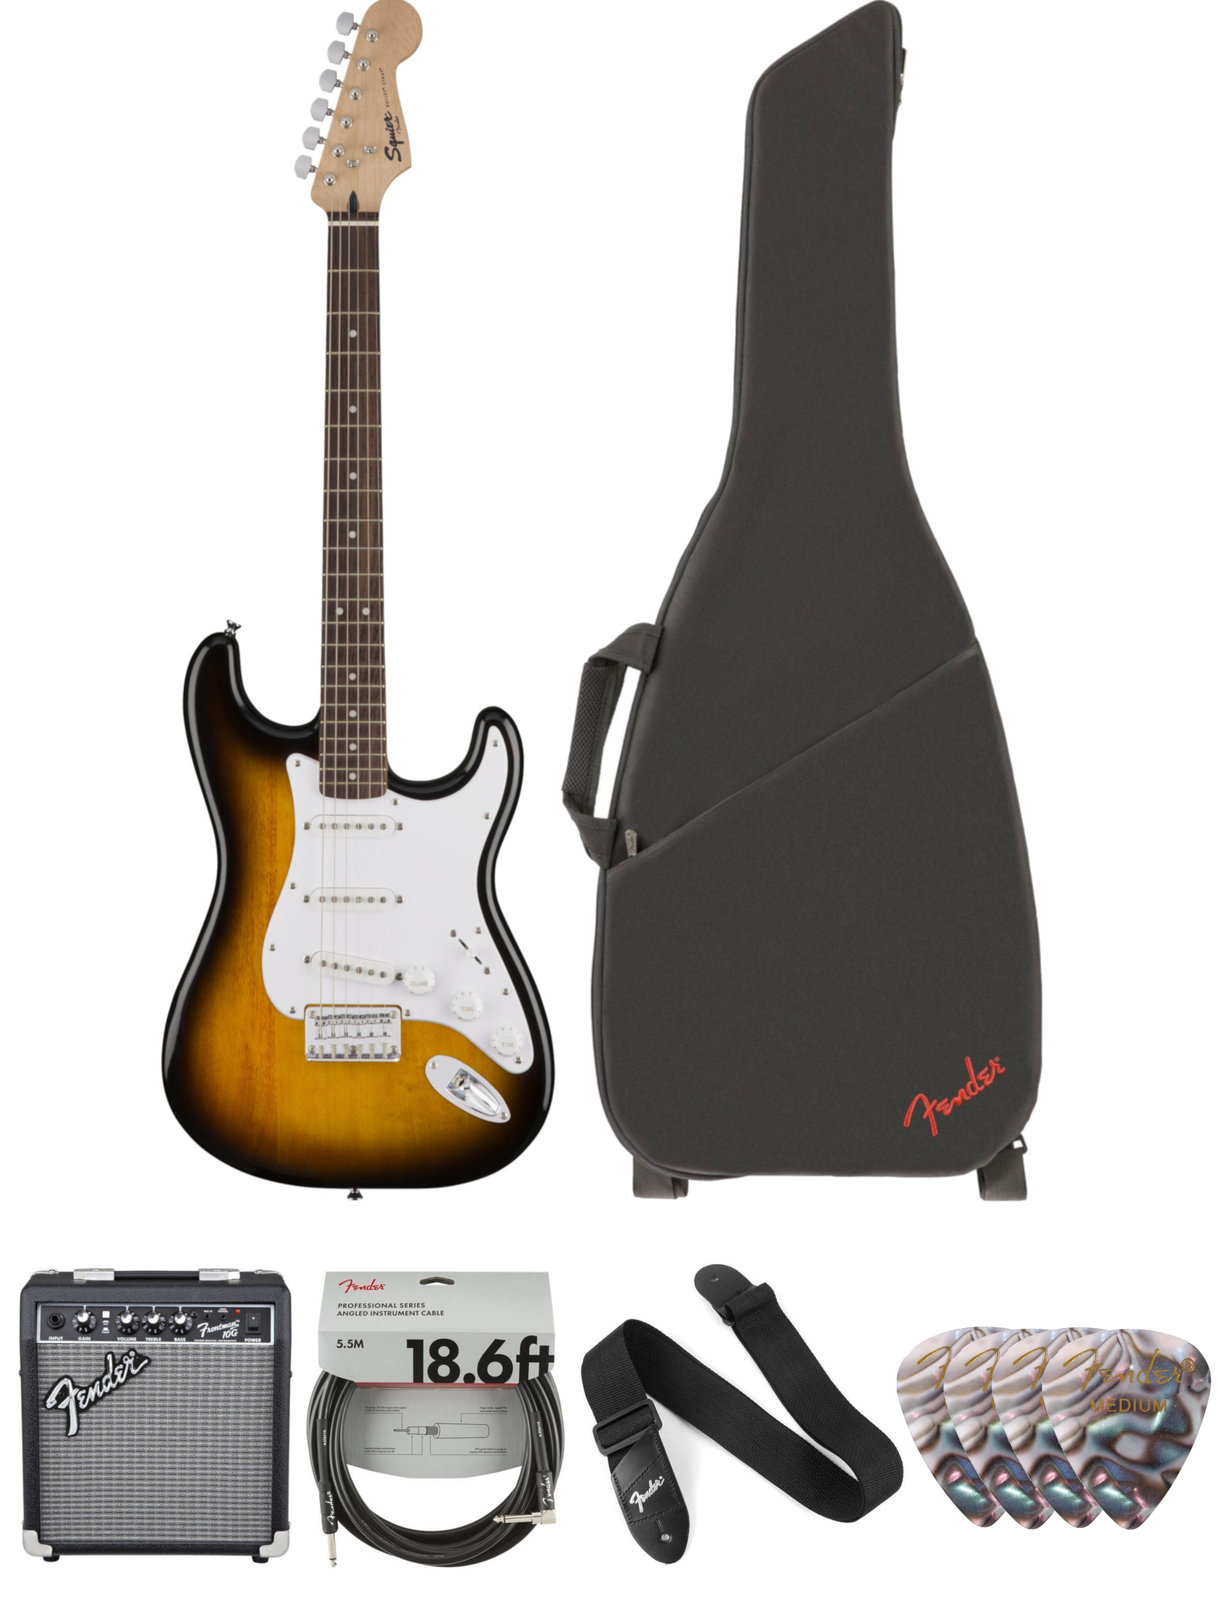 Fender Squier Bullet Stratocaster HT IL Brown Sunburst Deluxe SET Brown Sunburst